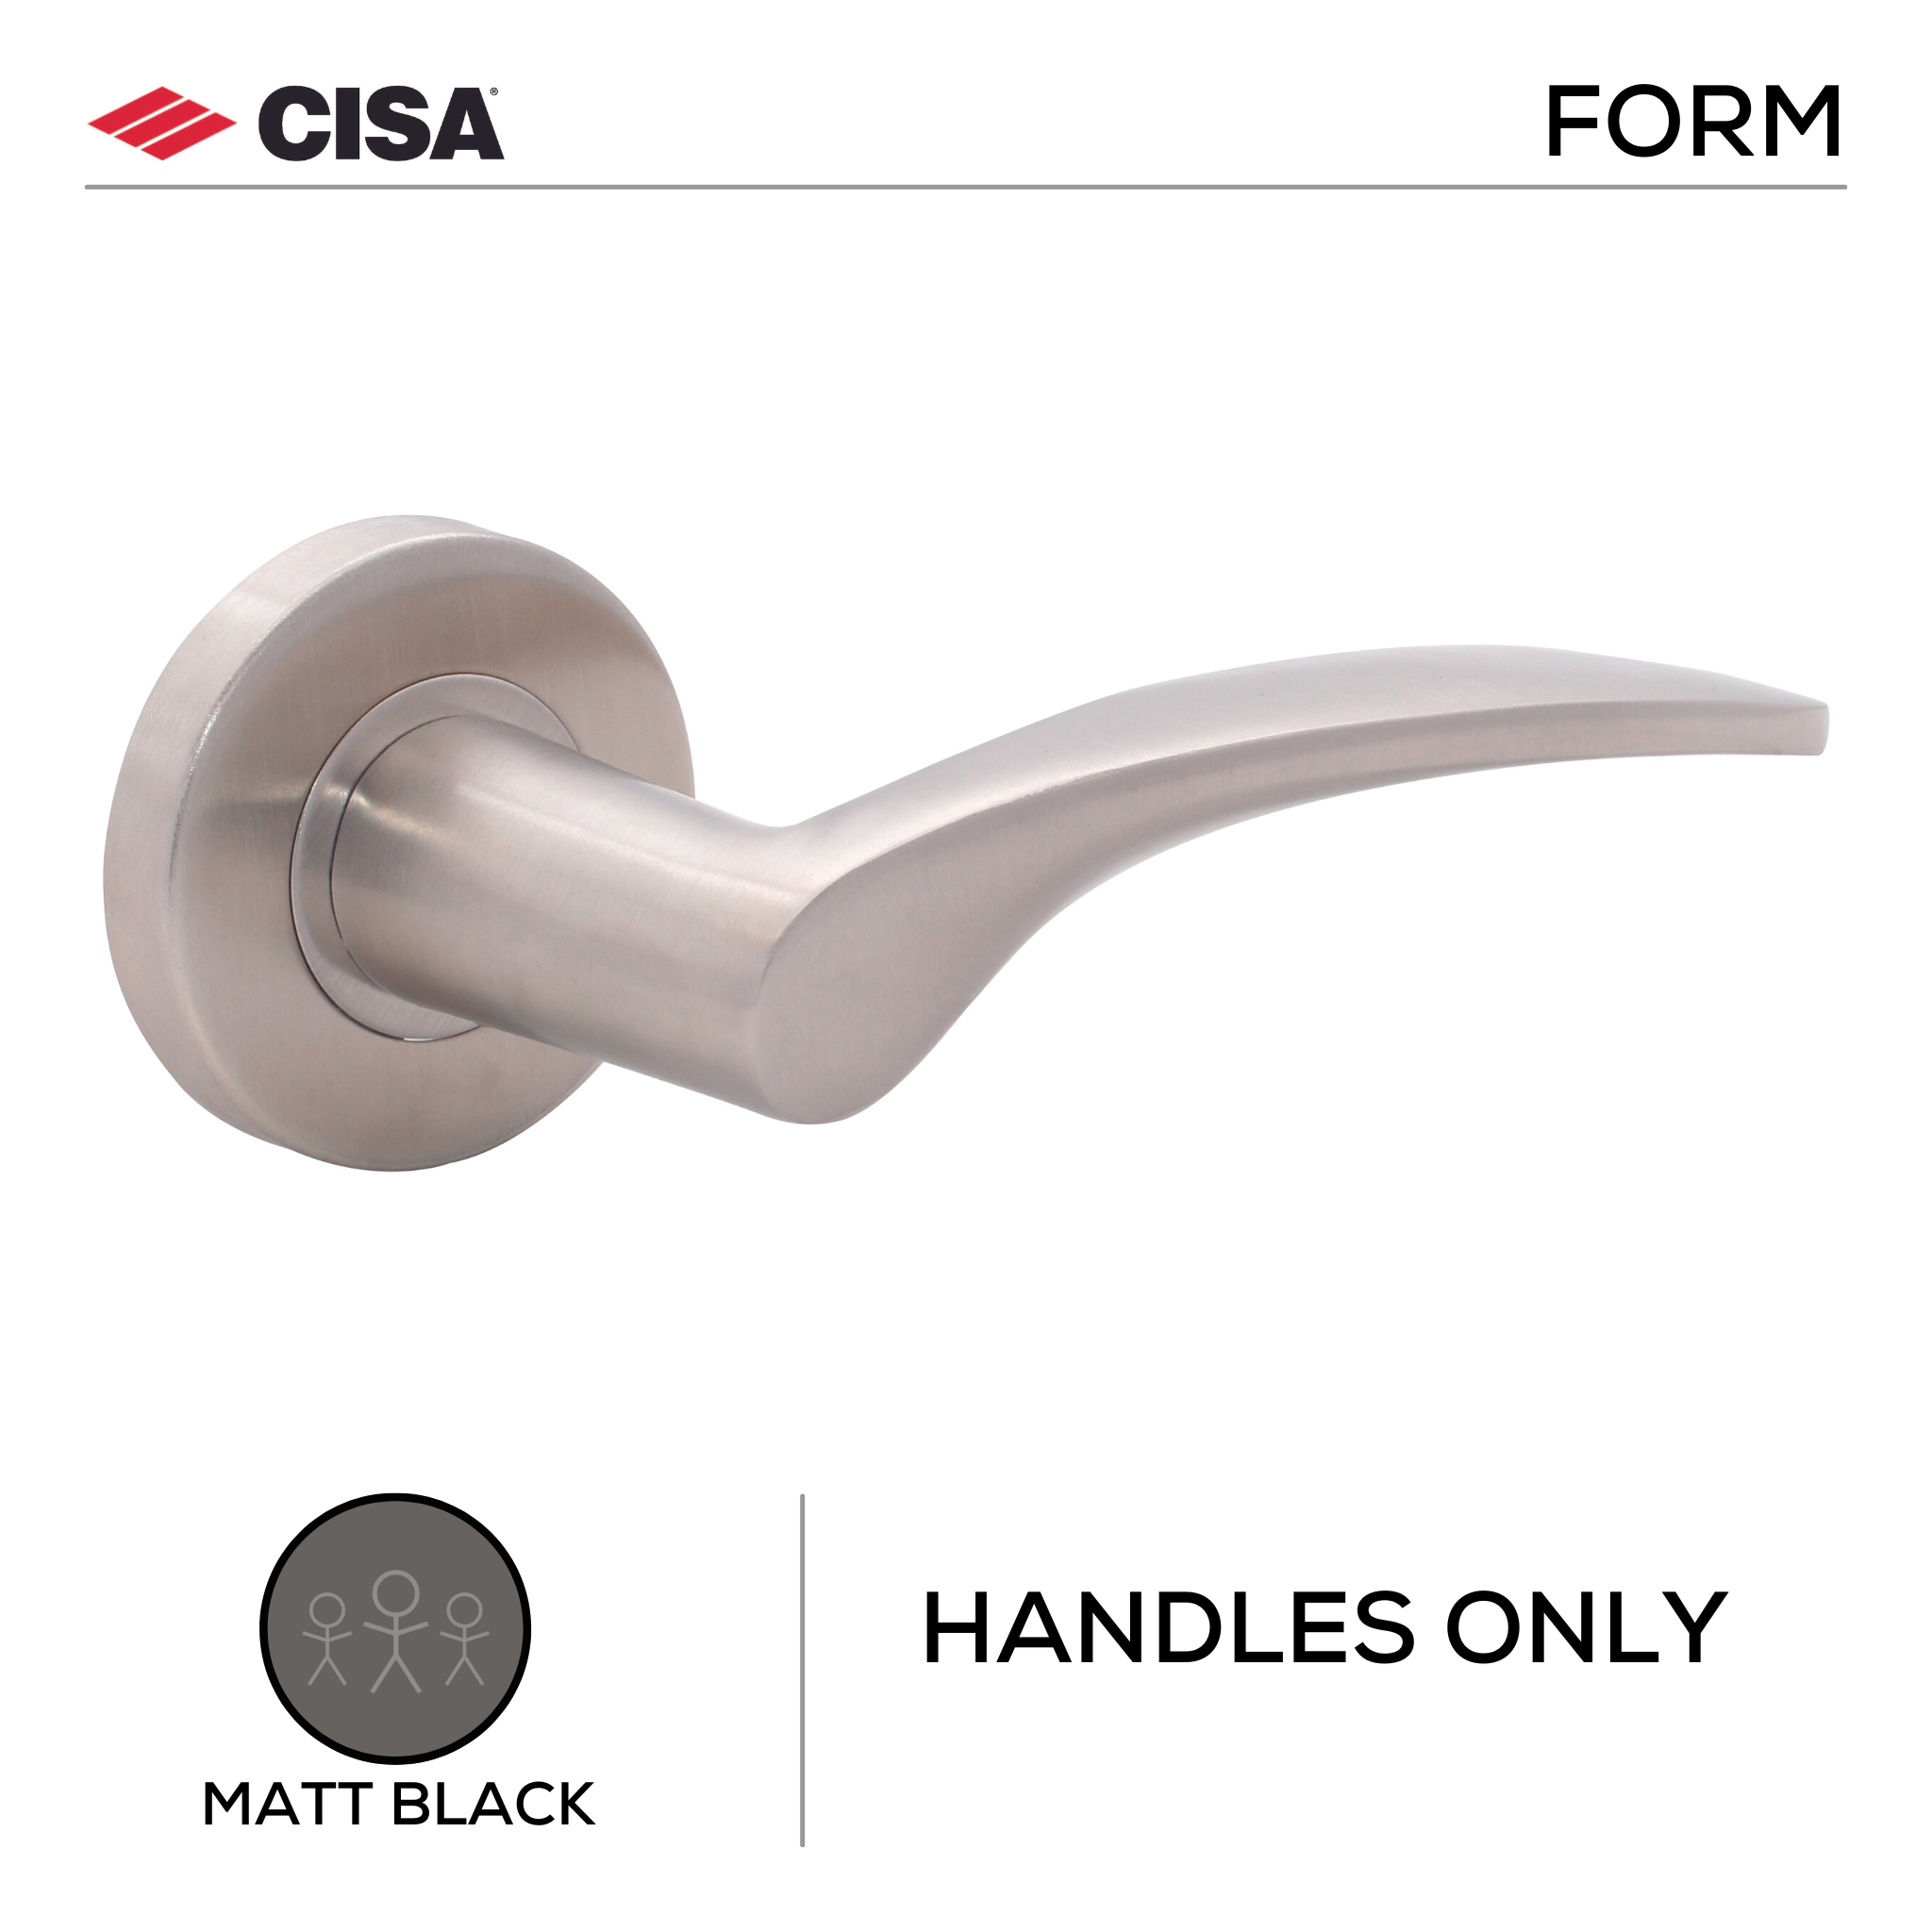 FS116.R.MBL, Lever Handles, Form, On Round Rose, Handles Only, Matt Black, CISA